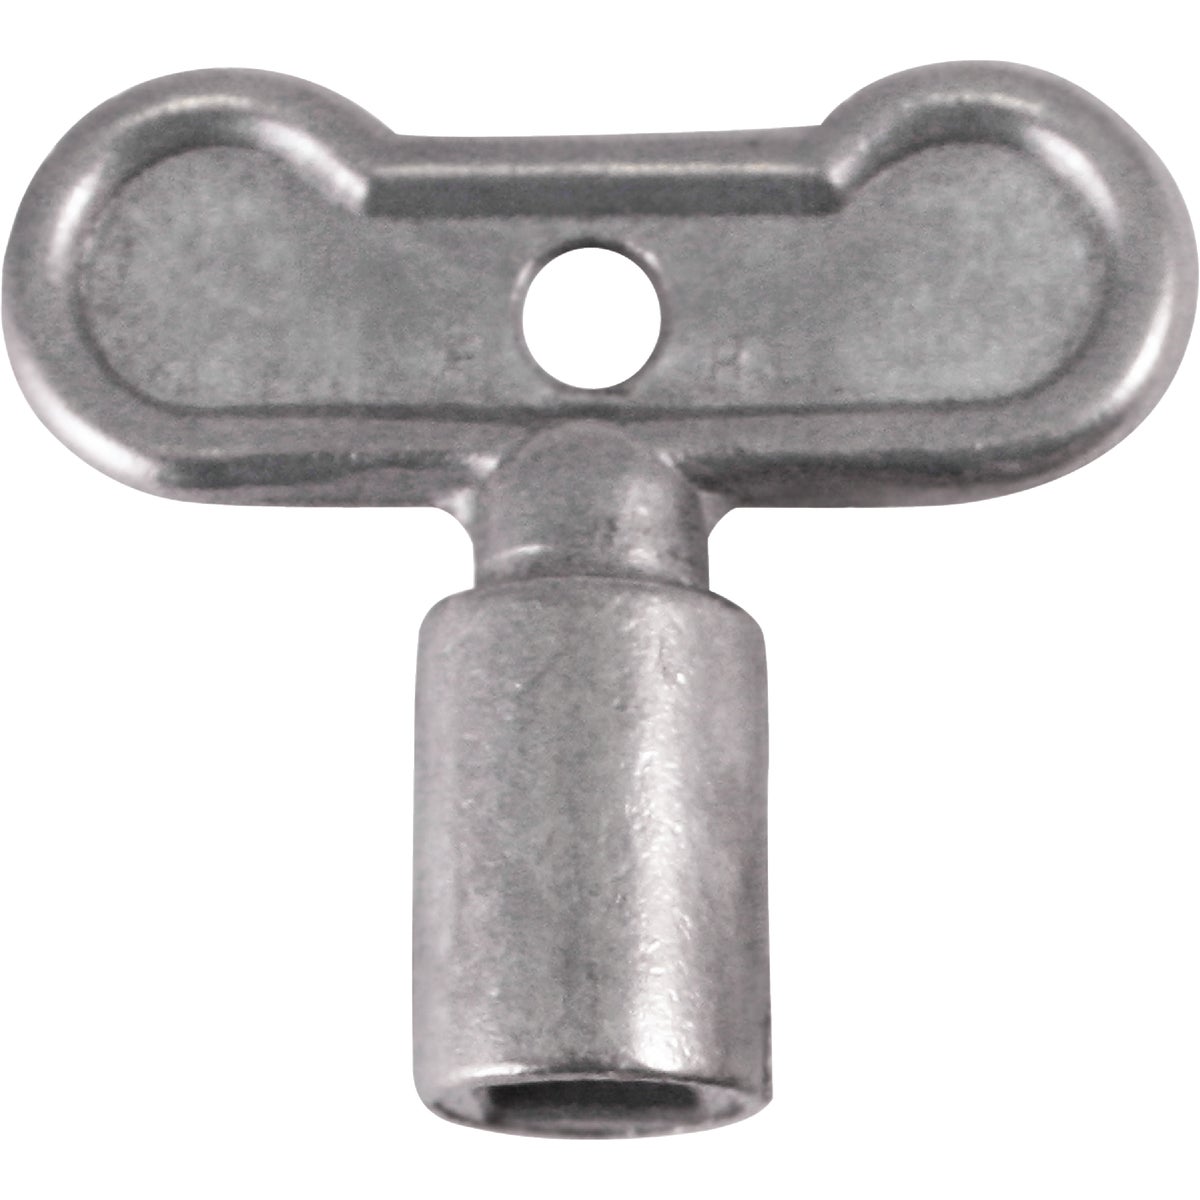 Item 458392, Loose key handle.